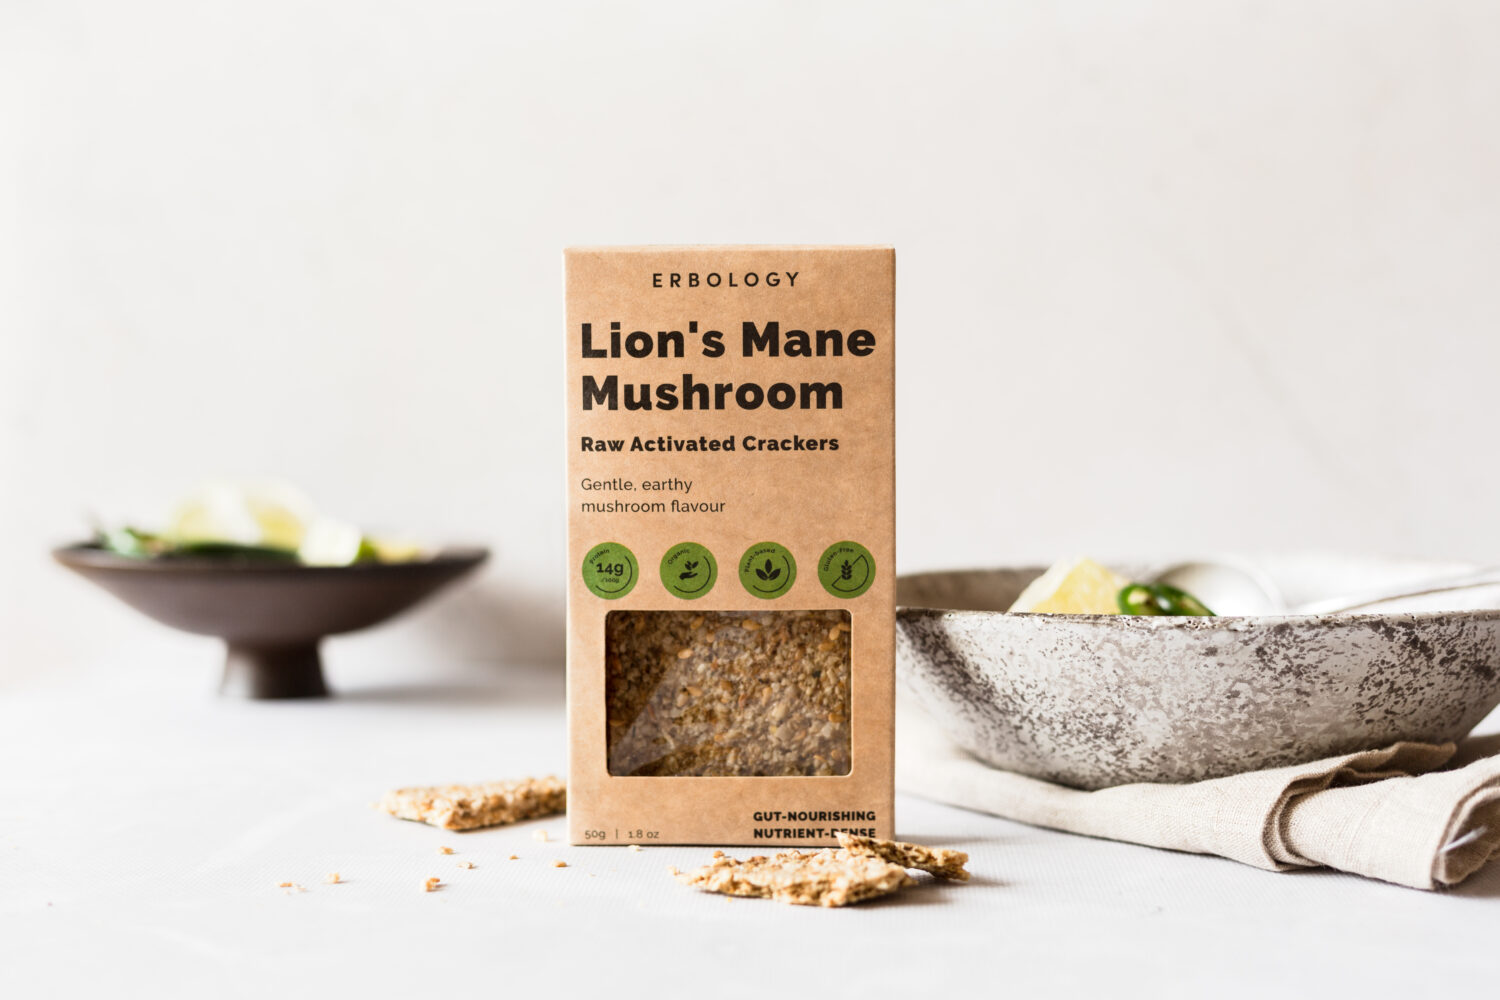 Organic Lion's Mane Mushroom Crackers